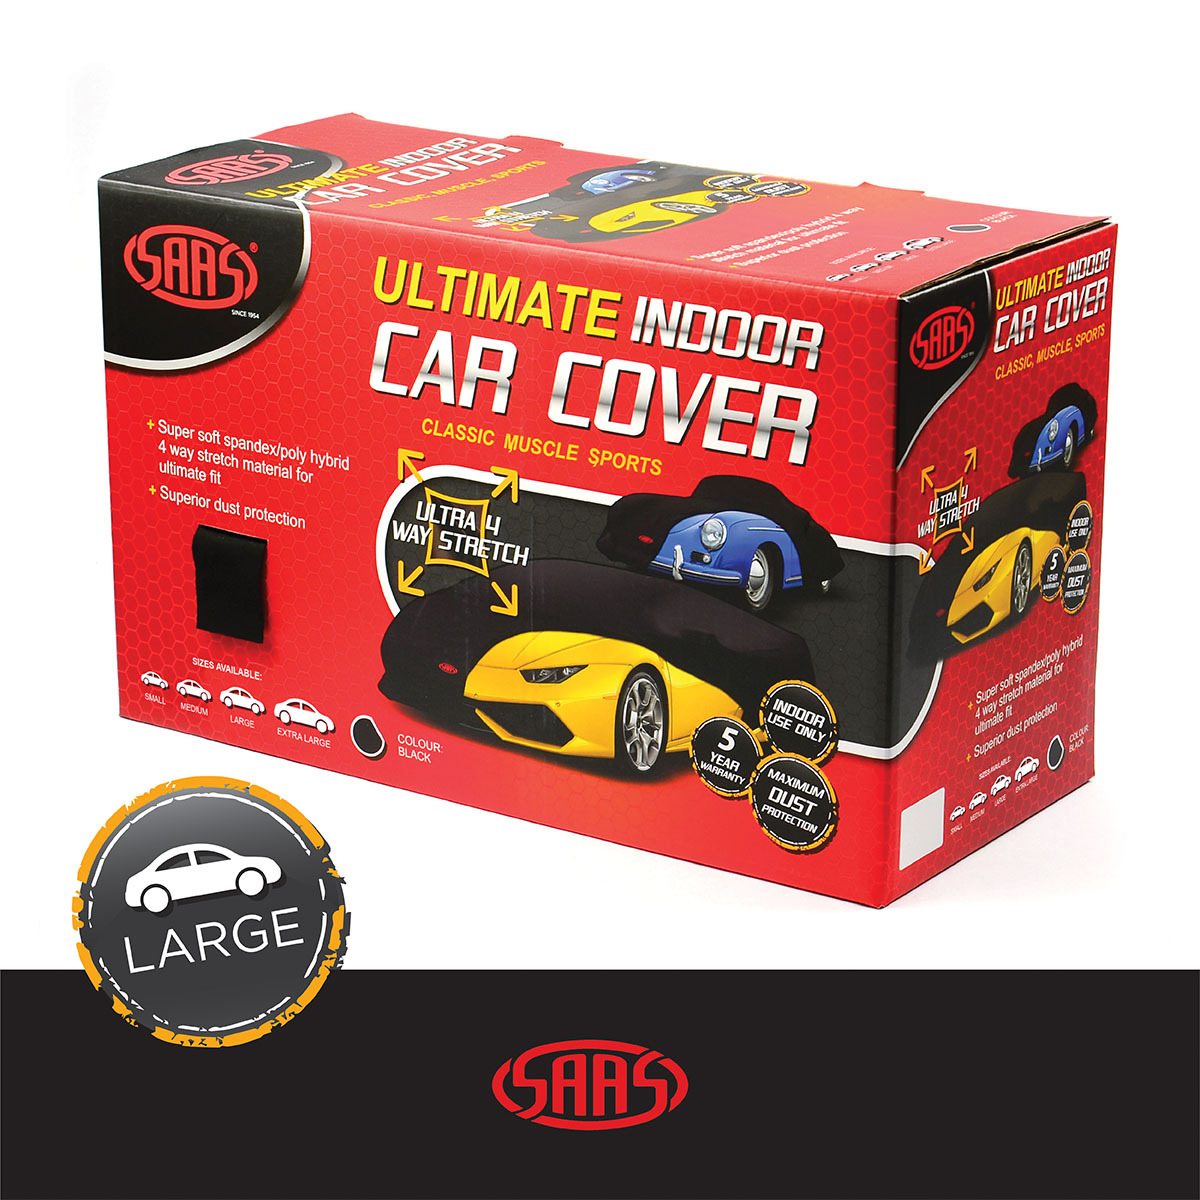 Car Cover Indoor Classic Ultra 4 Way 4.90m-5.30m Black